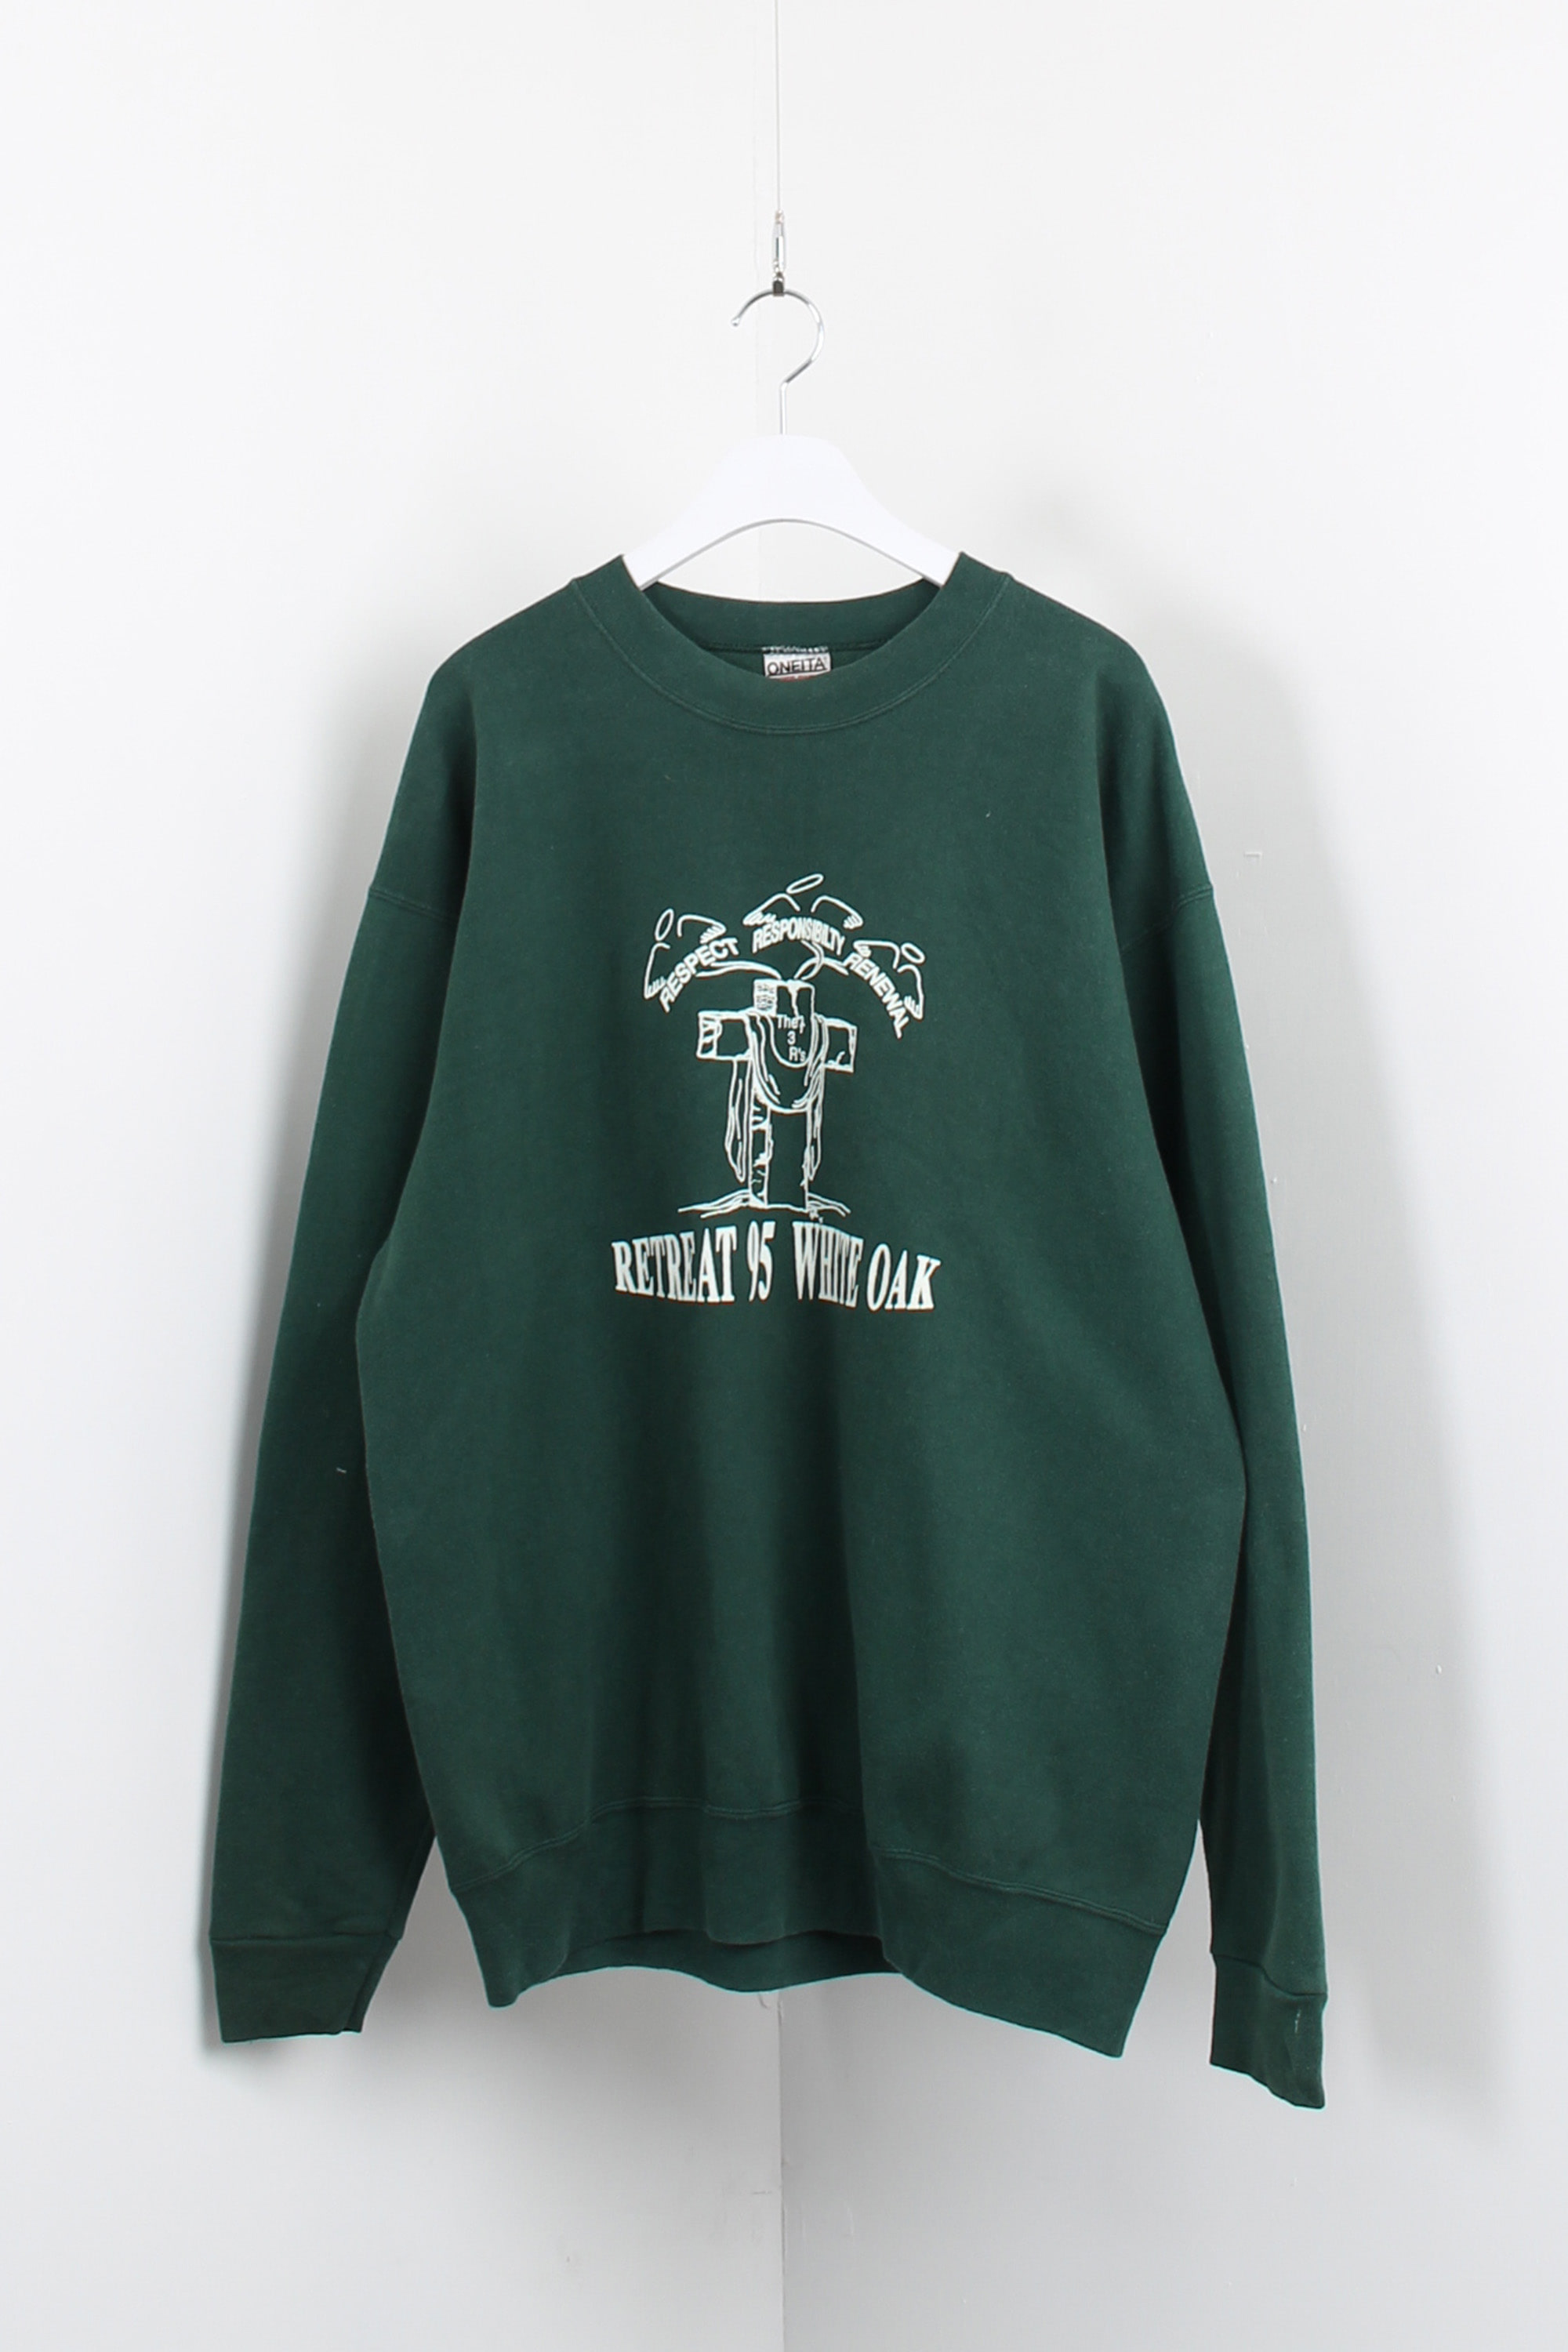 90s ONEITA sweatshirts